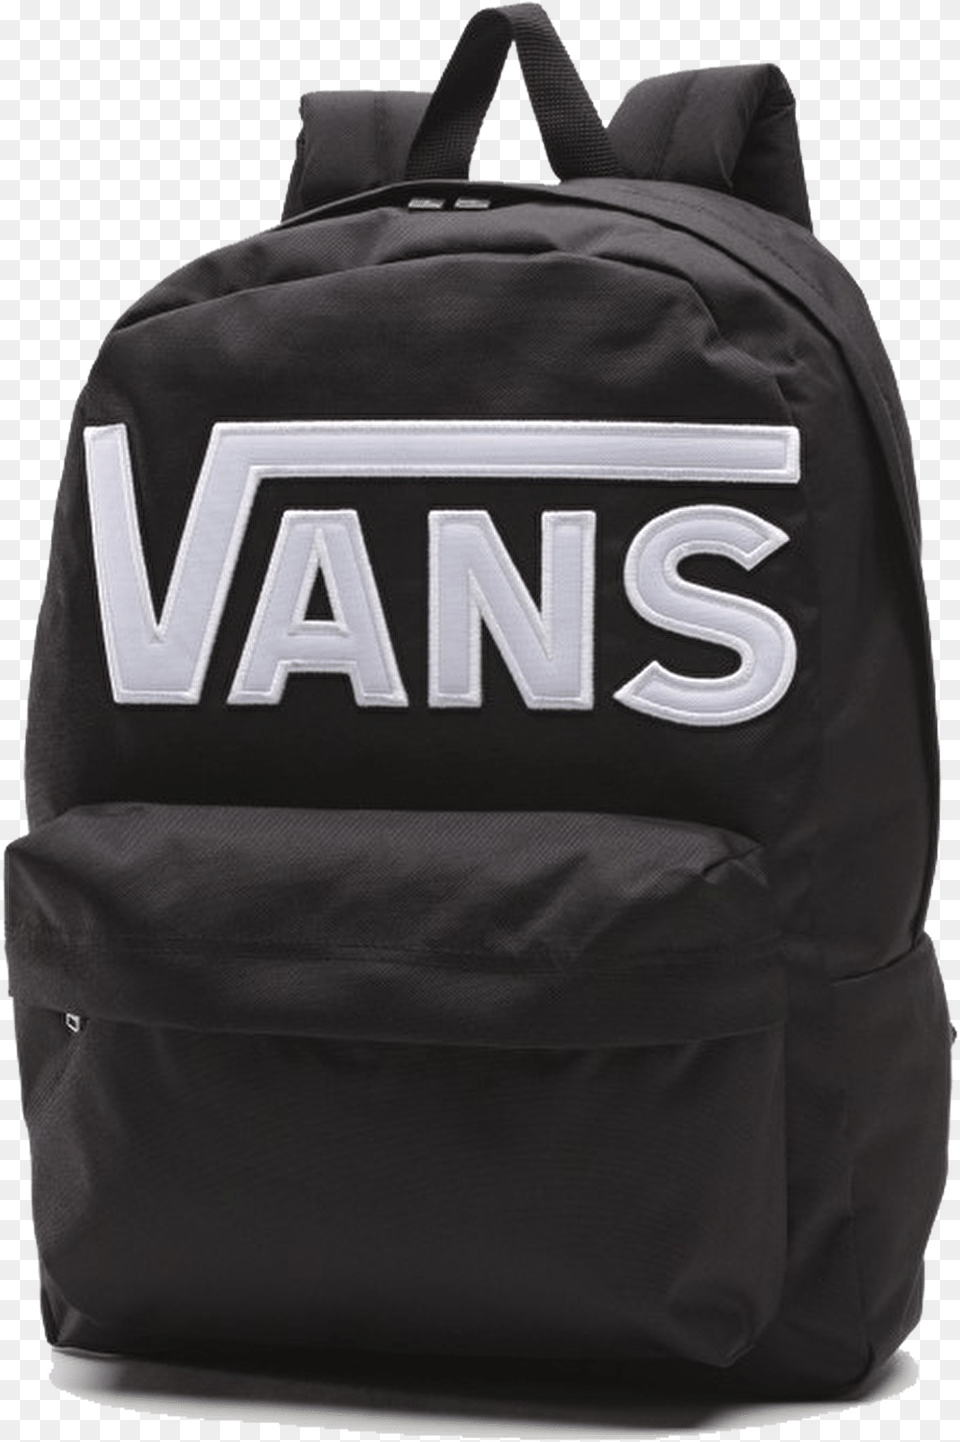 Green School Bag Download Plecak Vans Empik, Backpack, Accessories, Handbag Png Image